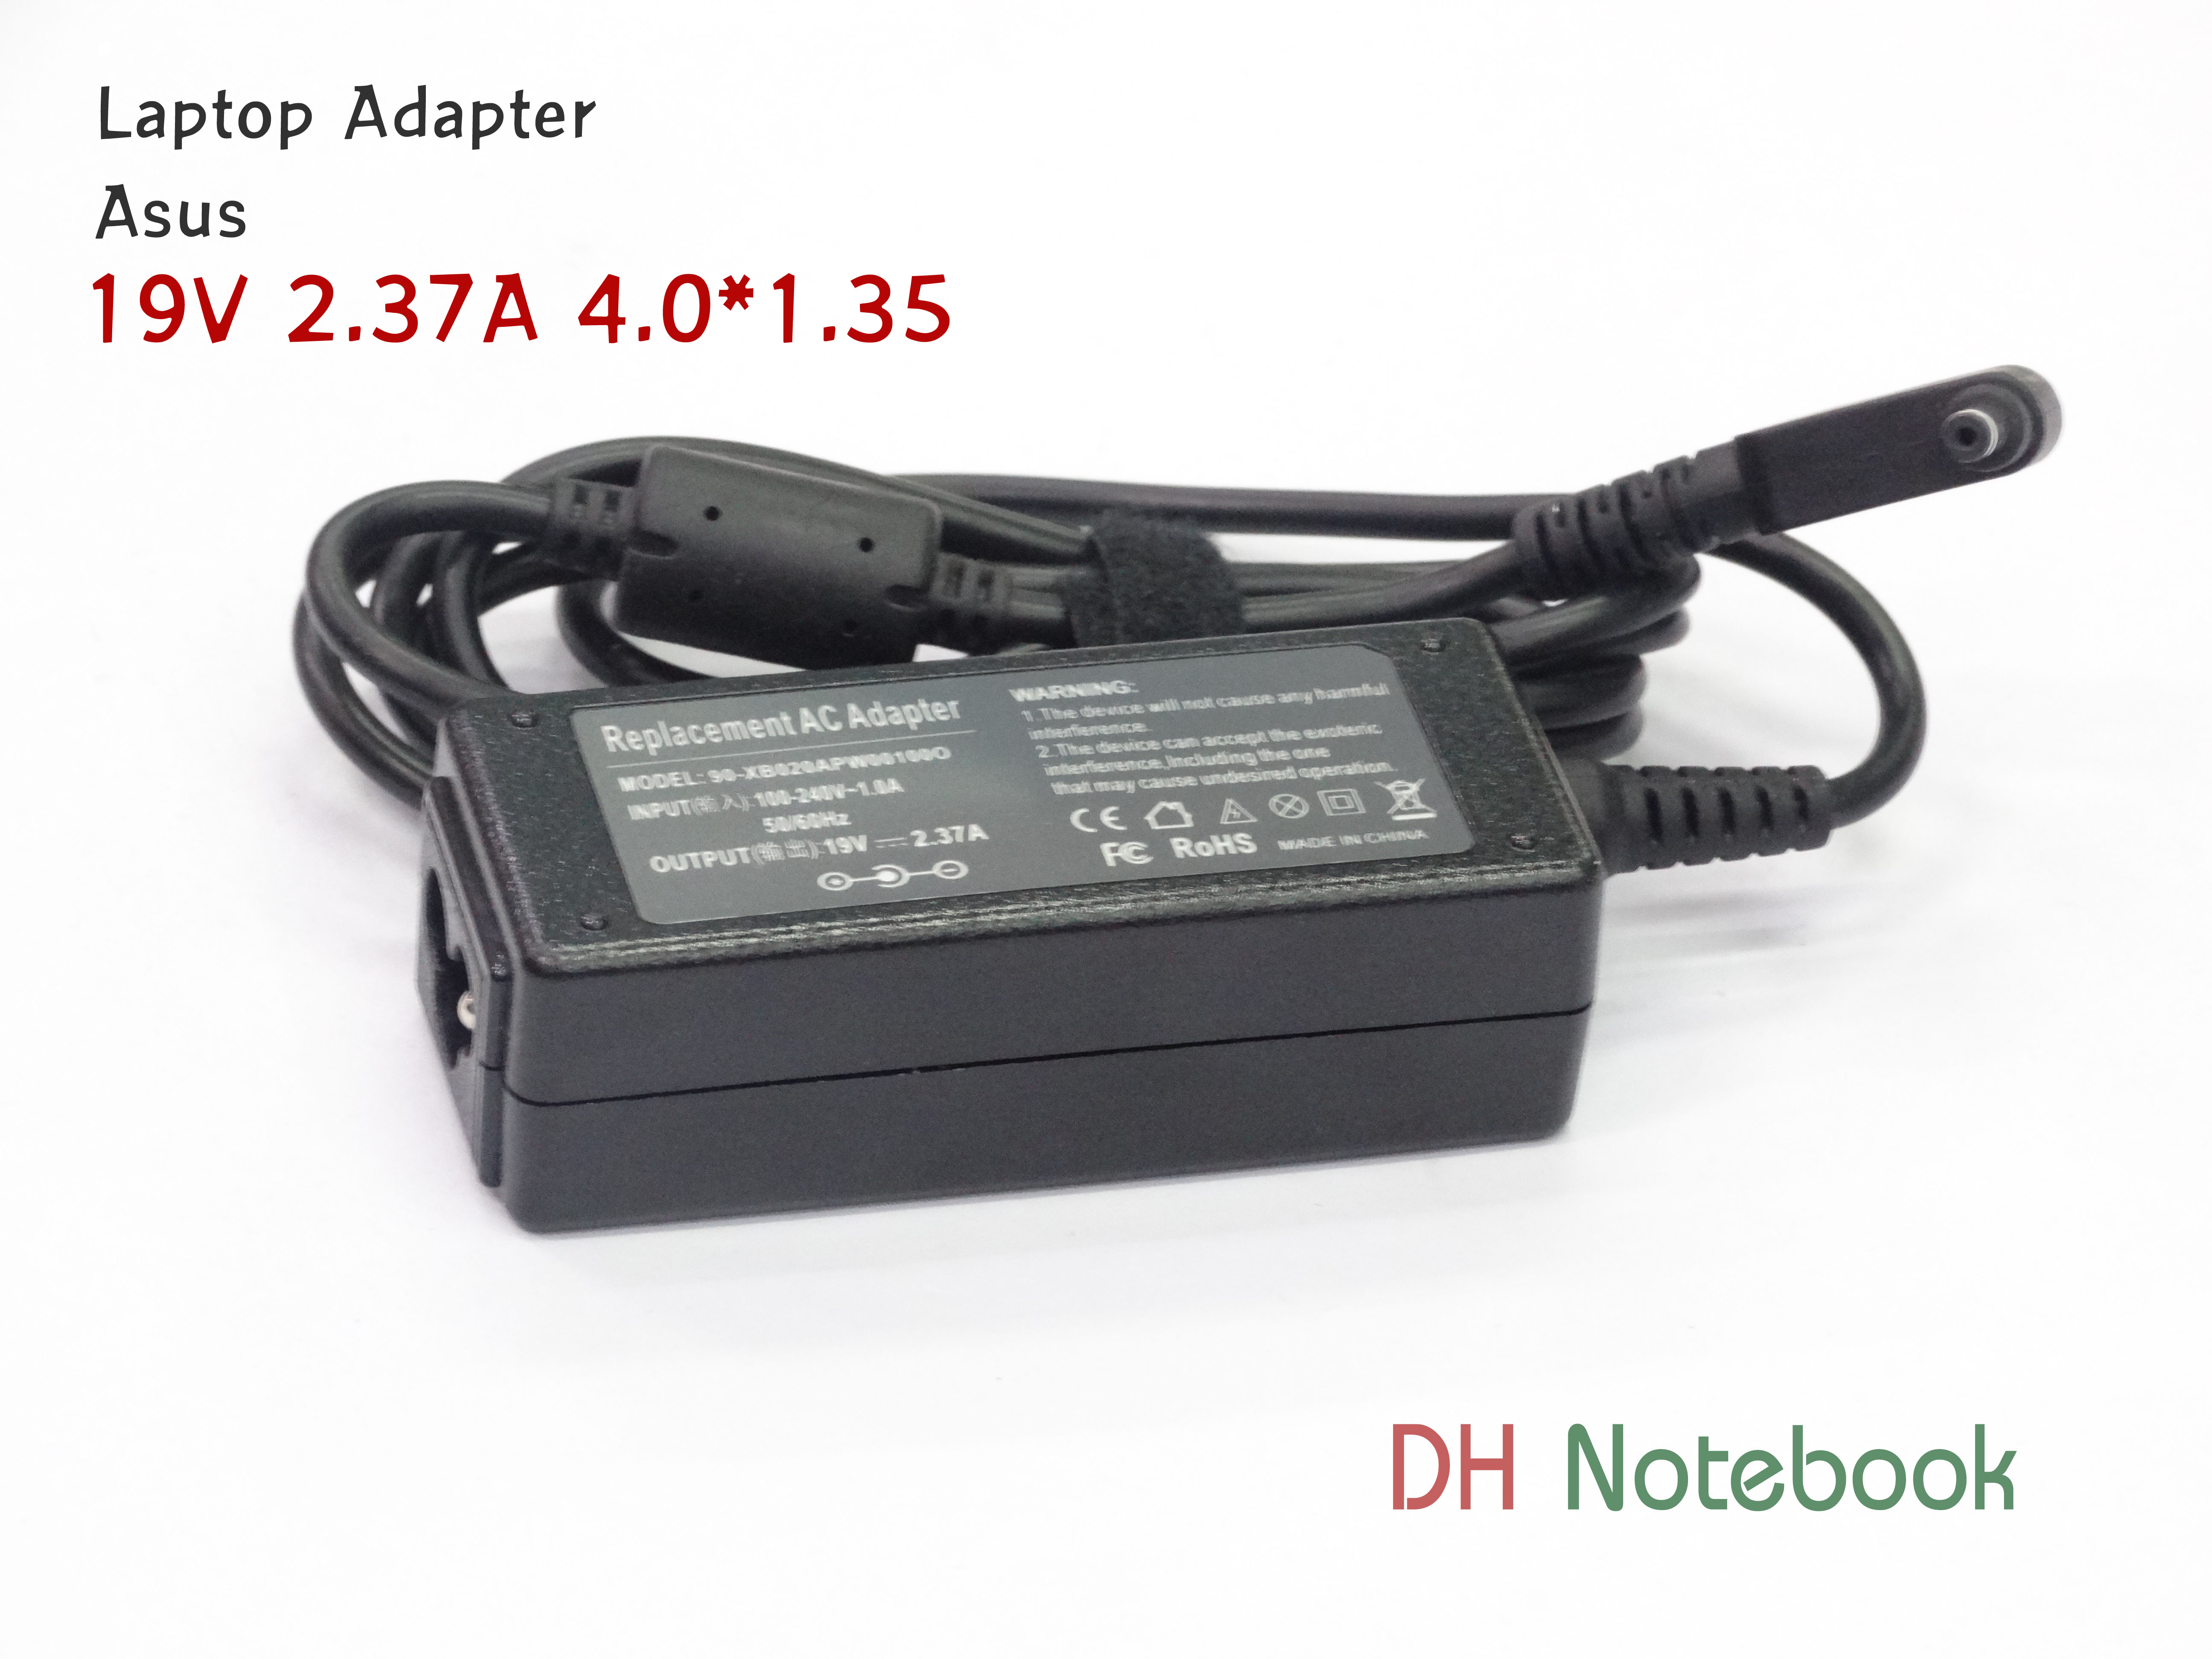 Adapter ASUS 19V 2.37A (4.0*1.35)